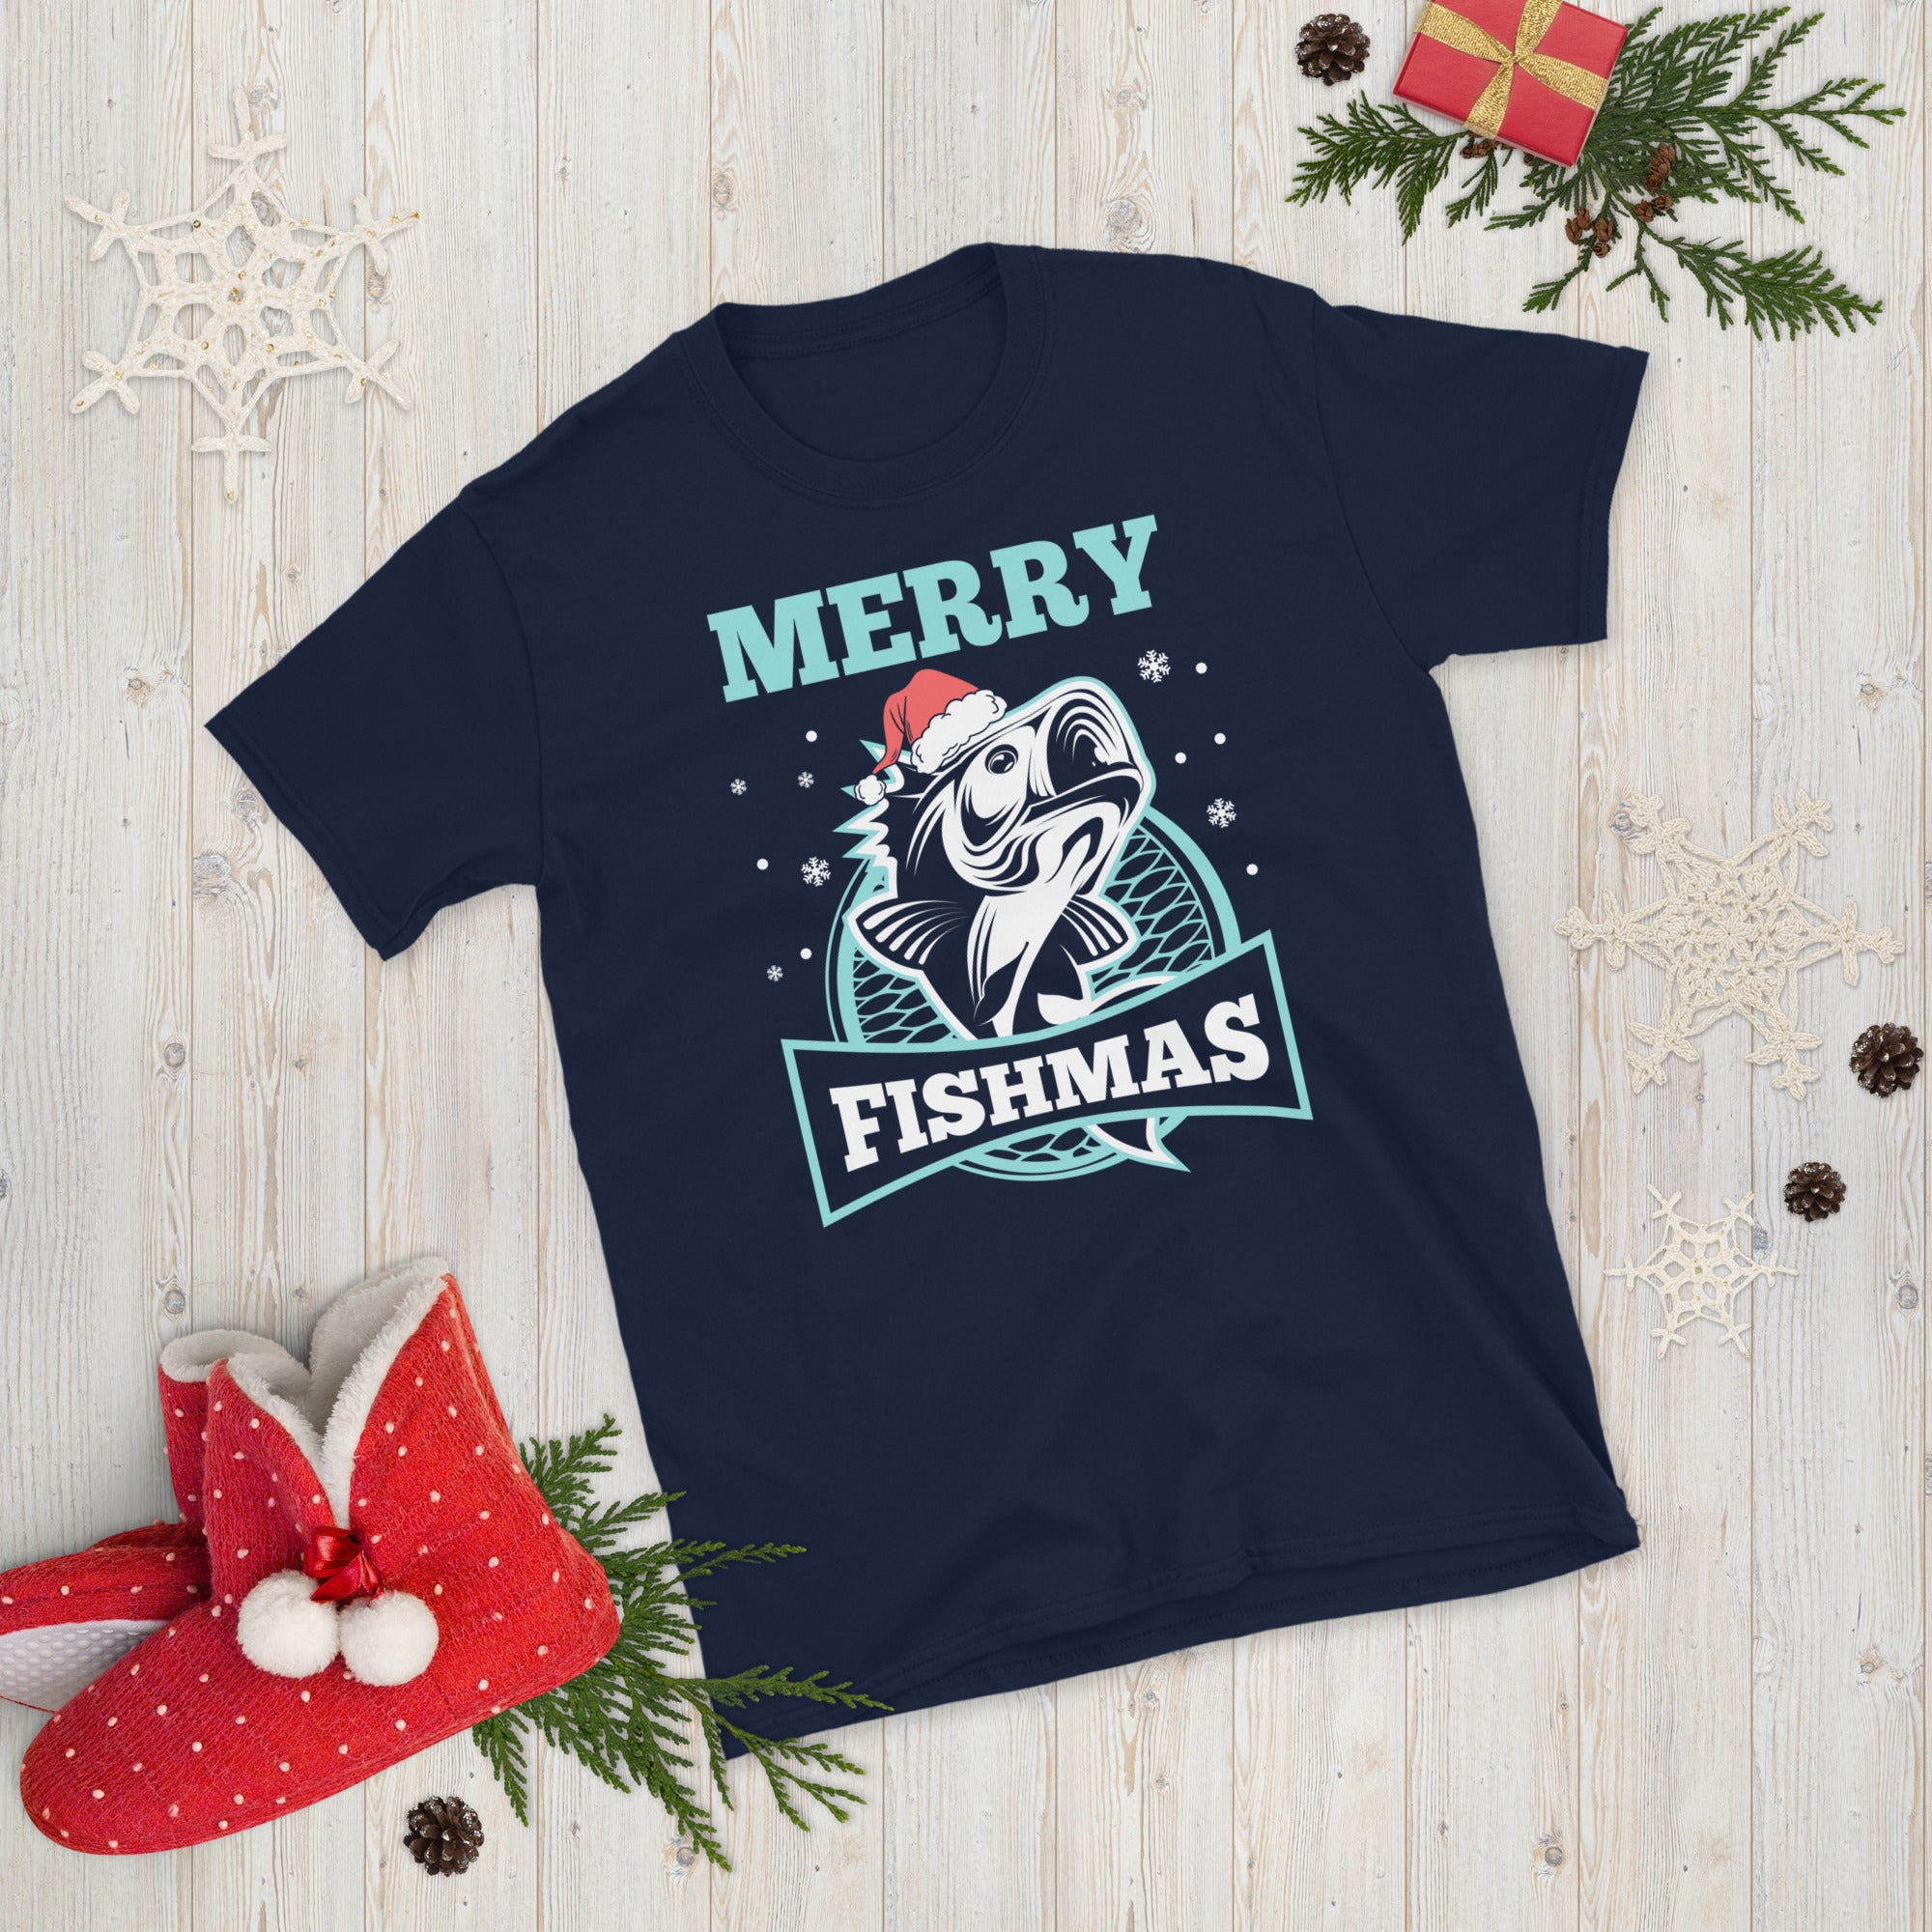 Merry Fishmas Shirt, Fishing Christmas T Shirt, Funny Fishing Shirt, Fishing Lover Shirt, Christmas Gift For Fisherman, Xmas Fishing Shirt